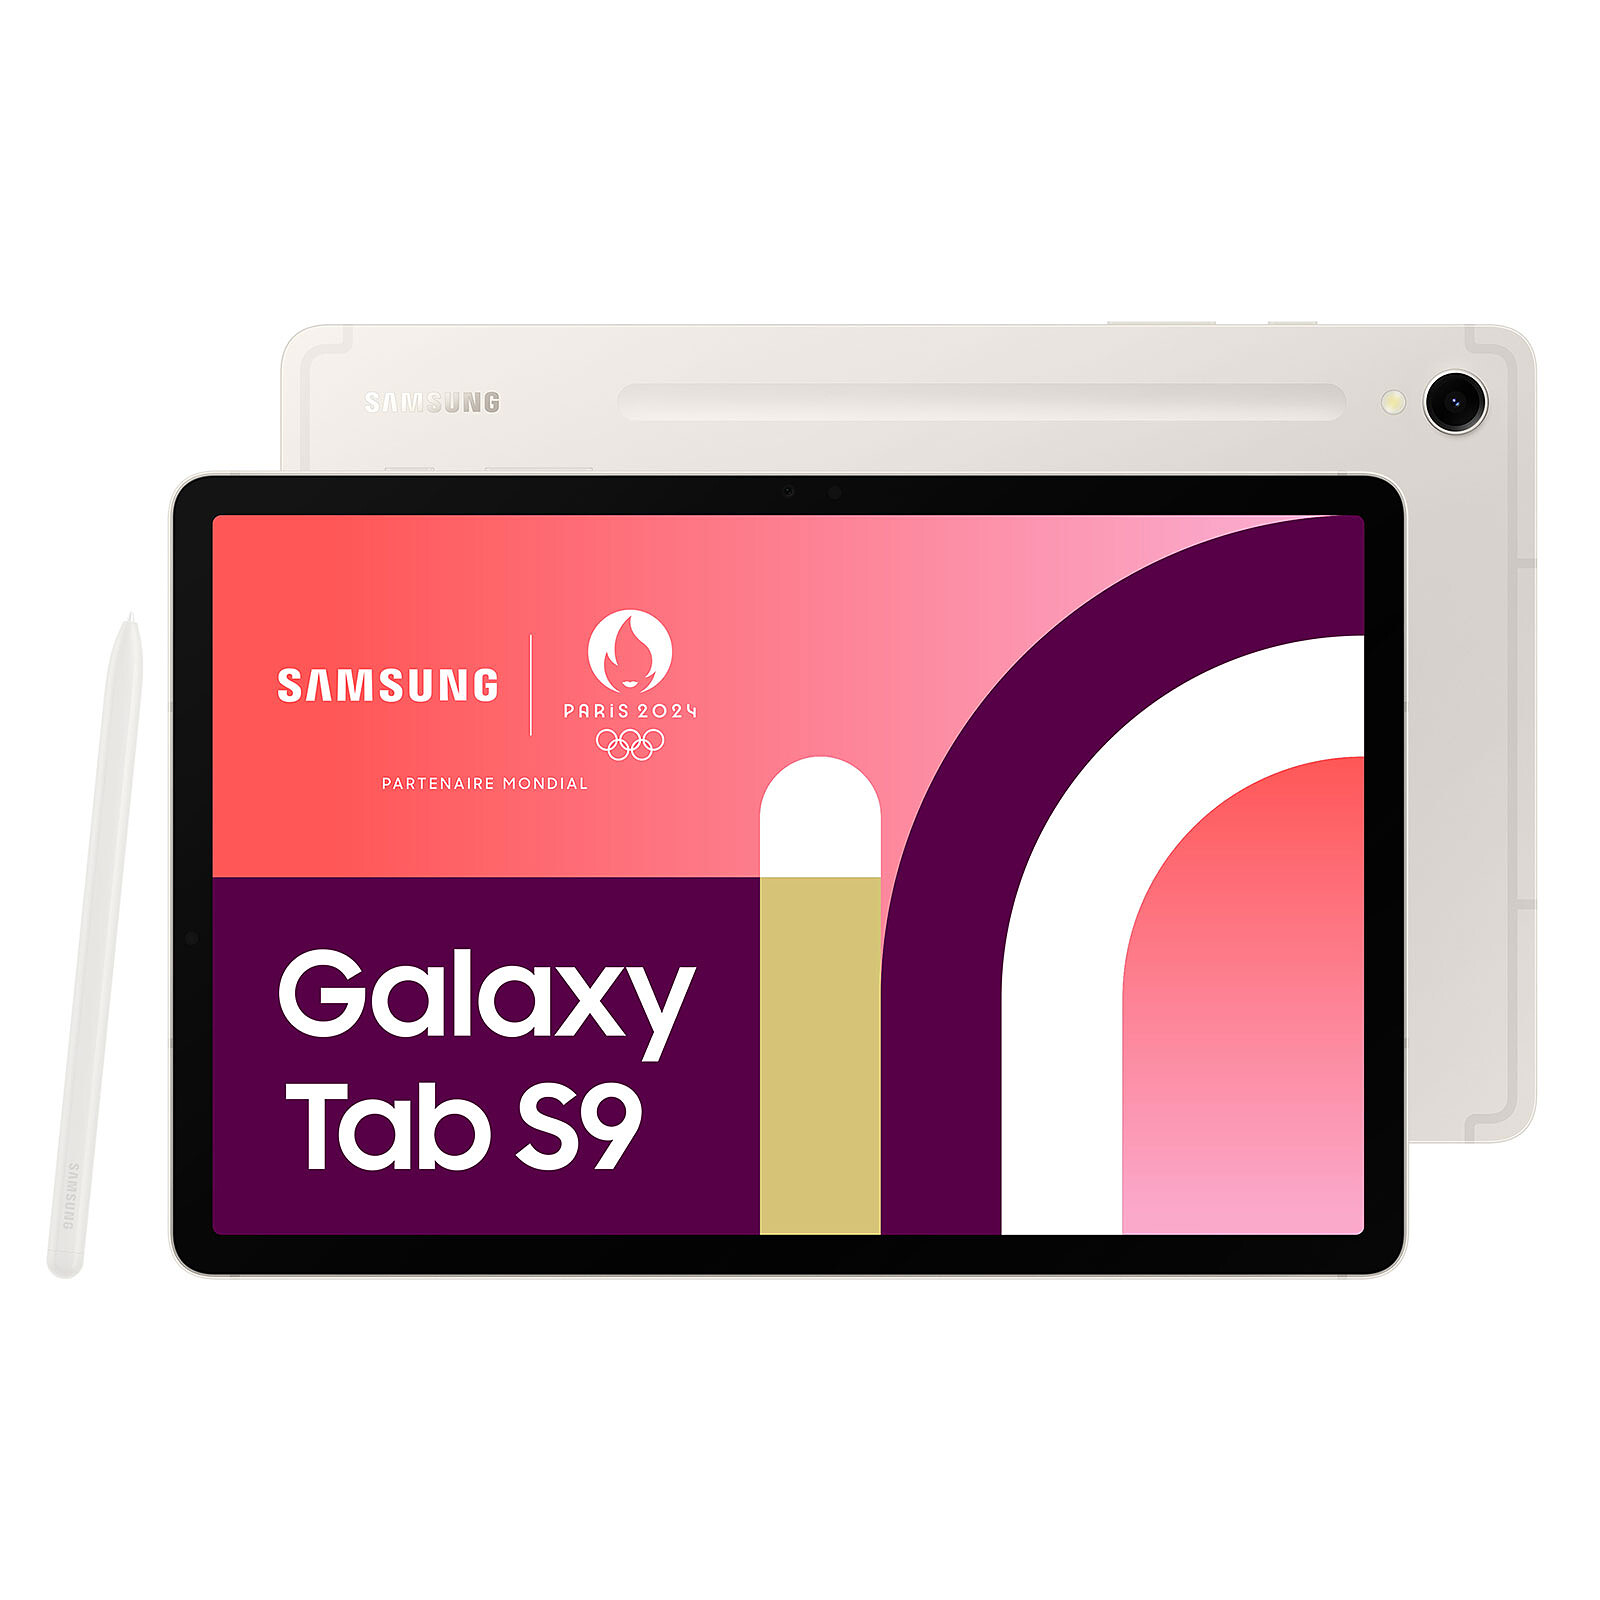 Tablette tactile - SAMSUNG Galaxy Tab S8+ - 12.4 - RAM 8Go